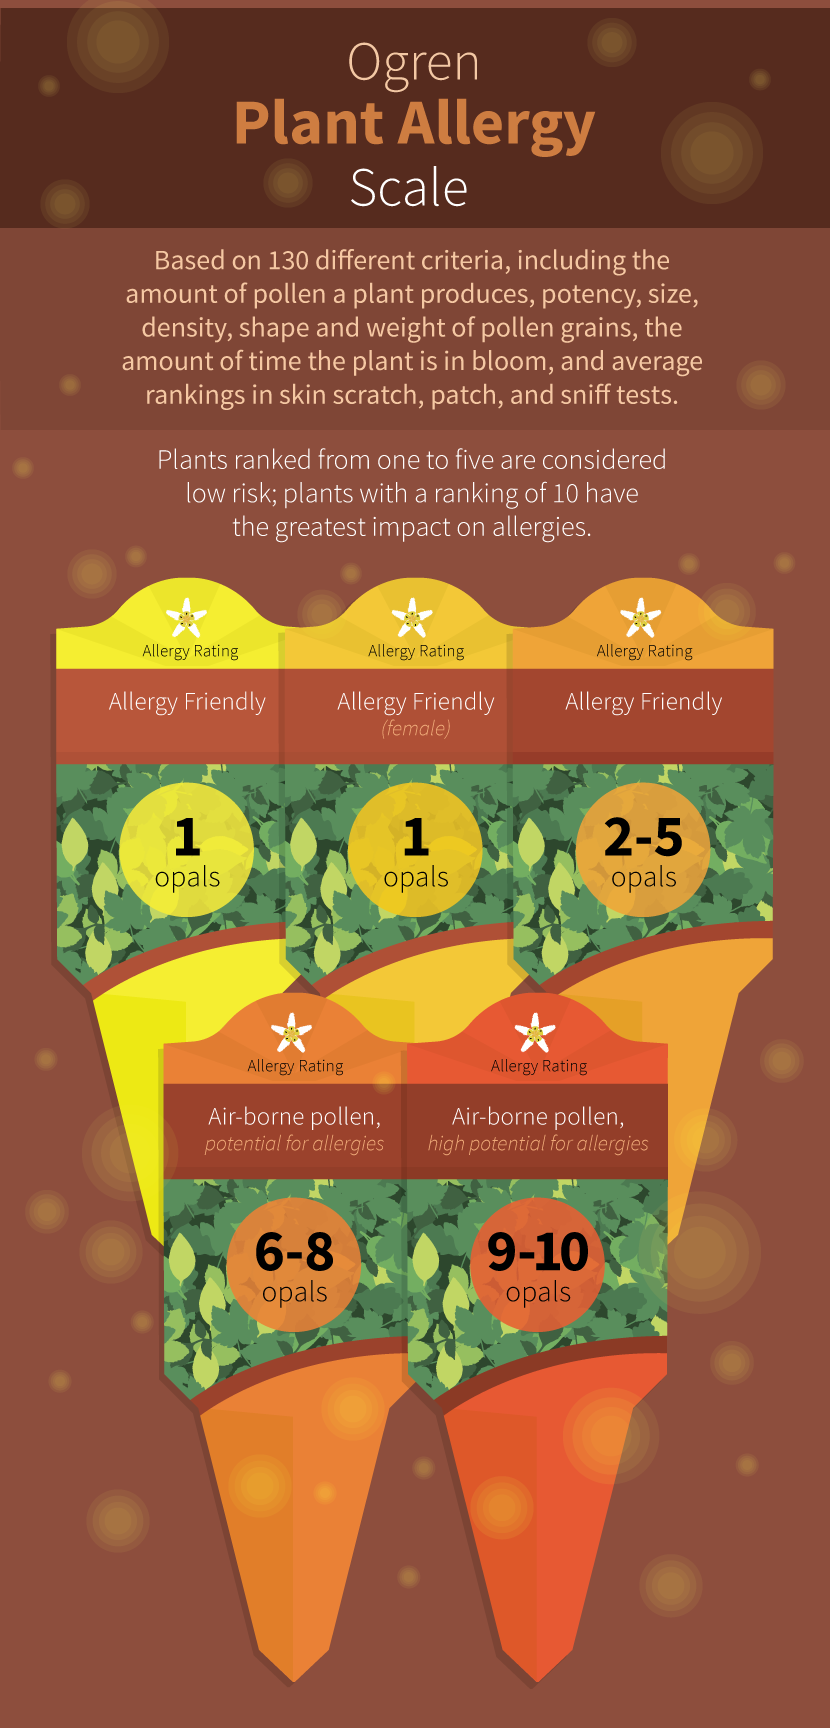 Ogren Plant Allergy Scale - Create a Sneeze-Free Garden